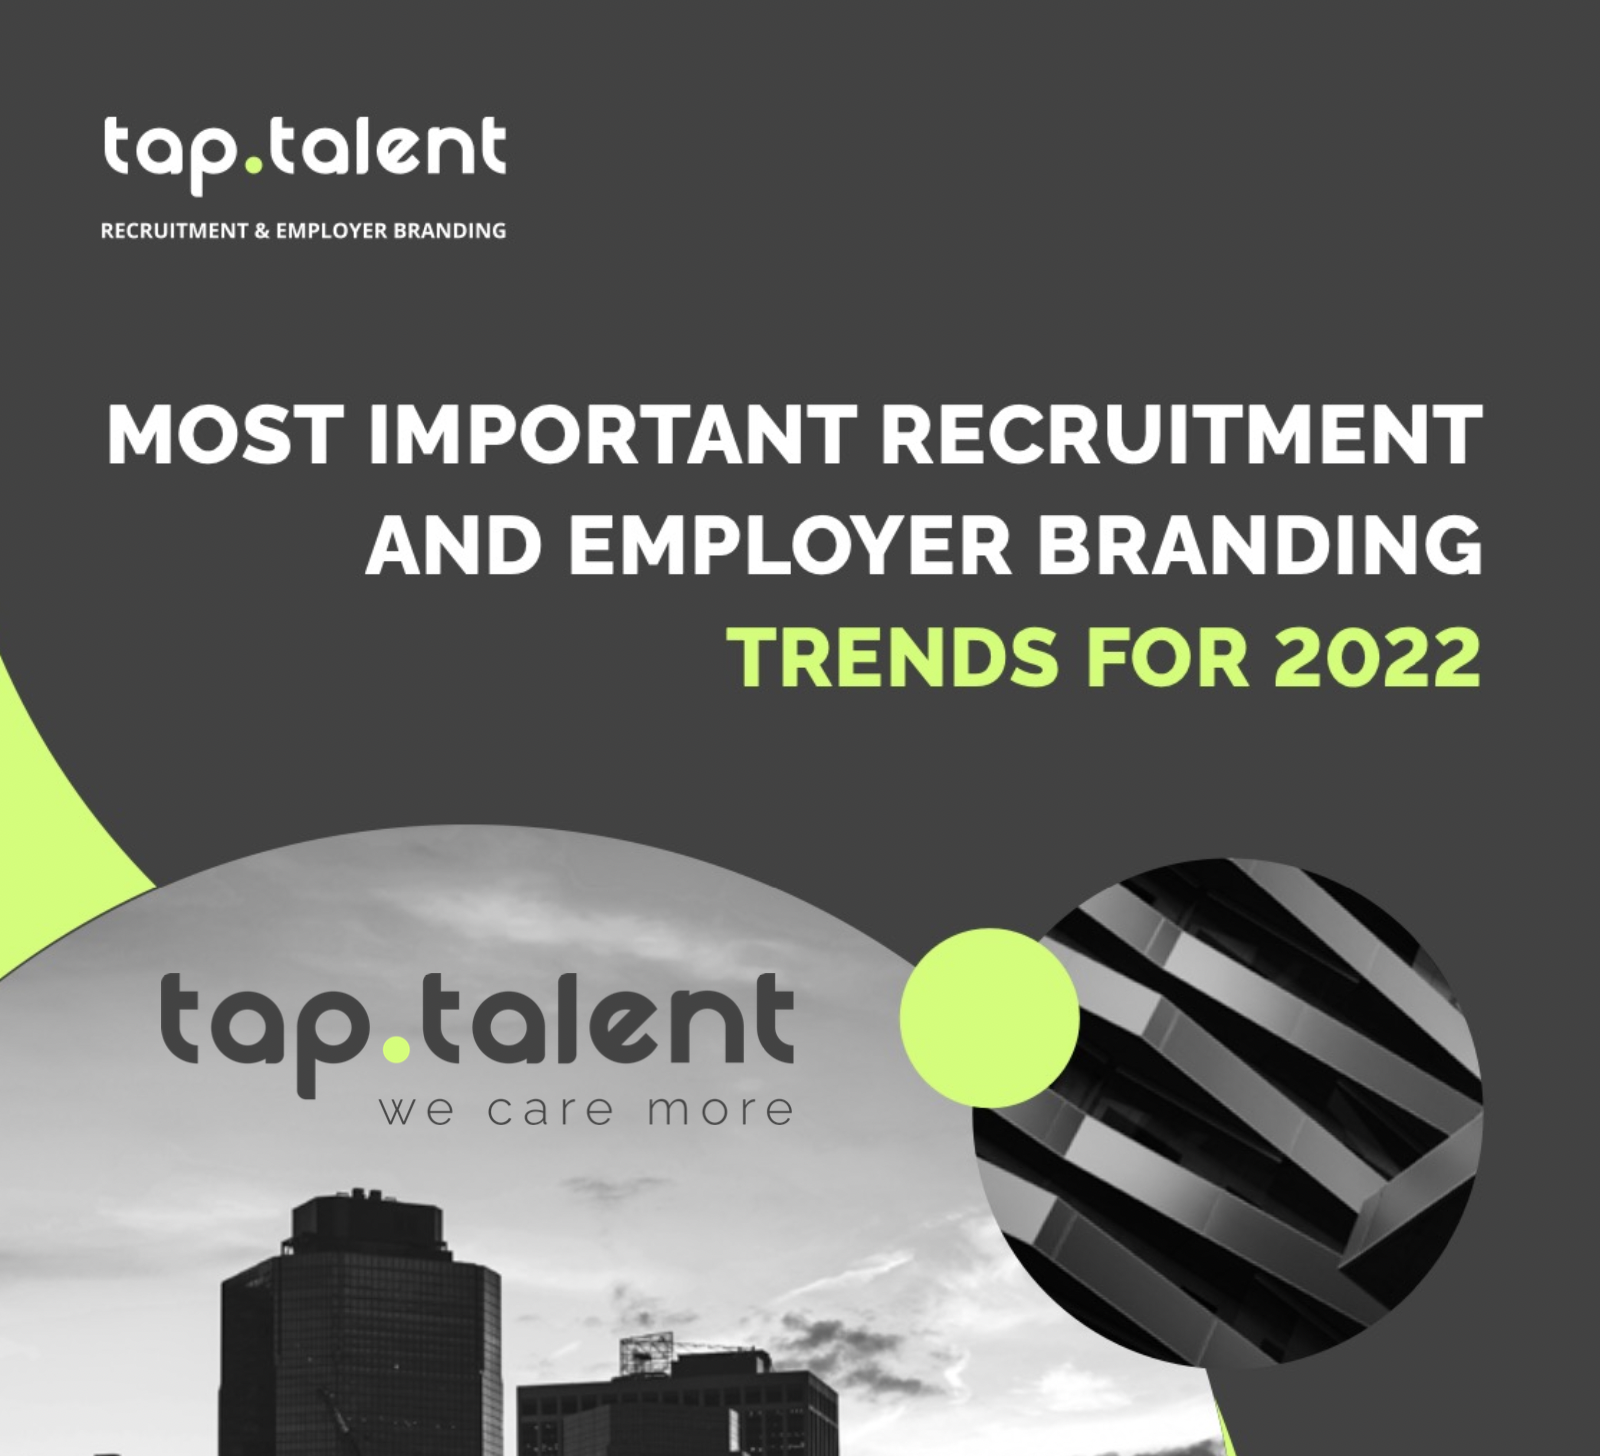 Trendy rekrutacyjne i employer brandingowe 2022